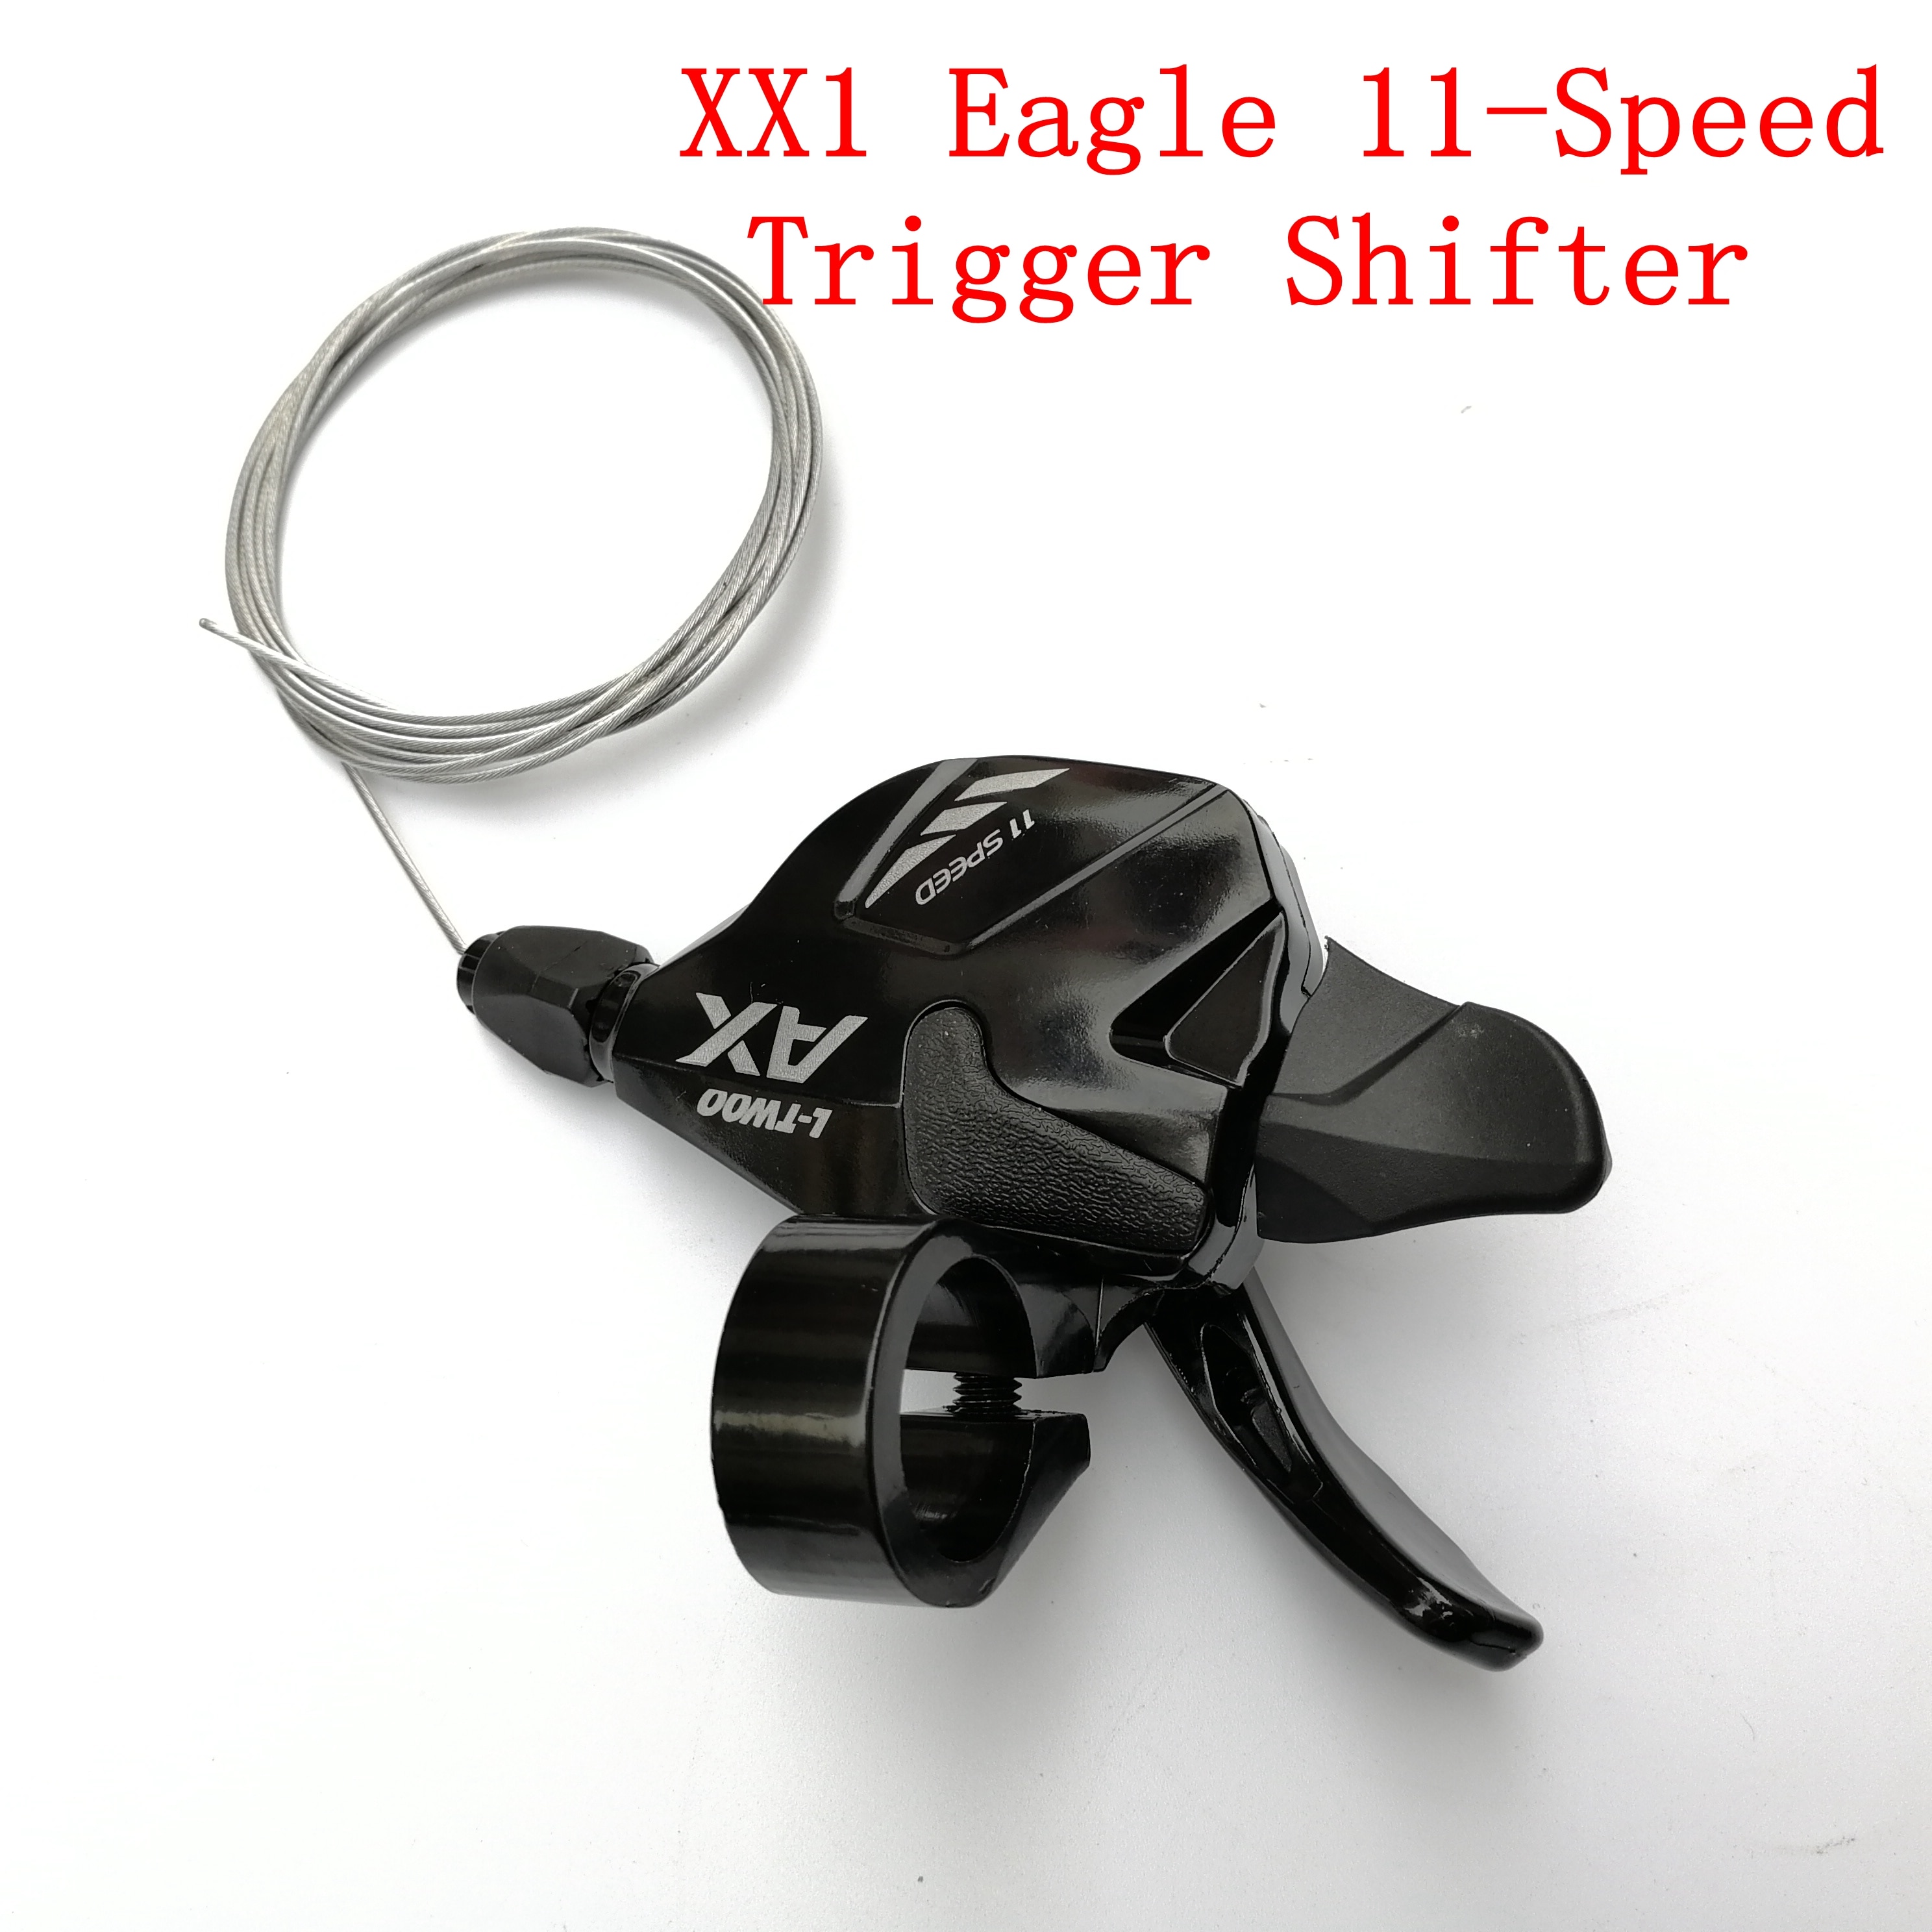 Ltwoo X01 X1 Nx 11-Speed Trigger Shifter Achter 11 Speed Gx Fiets Trigger Shifte